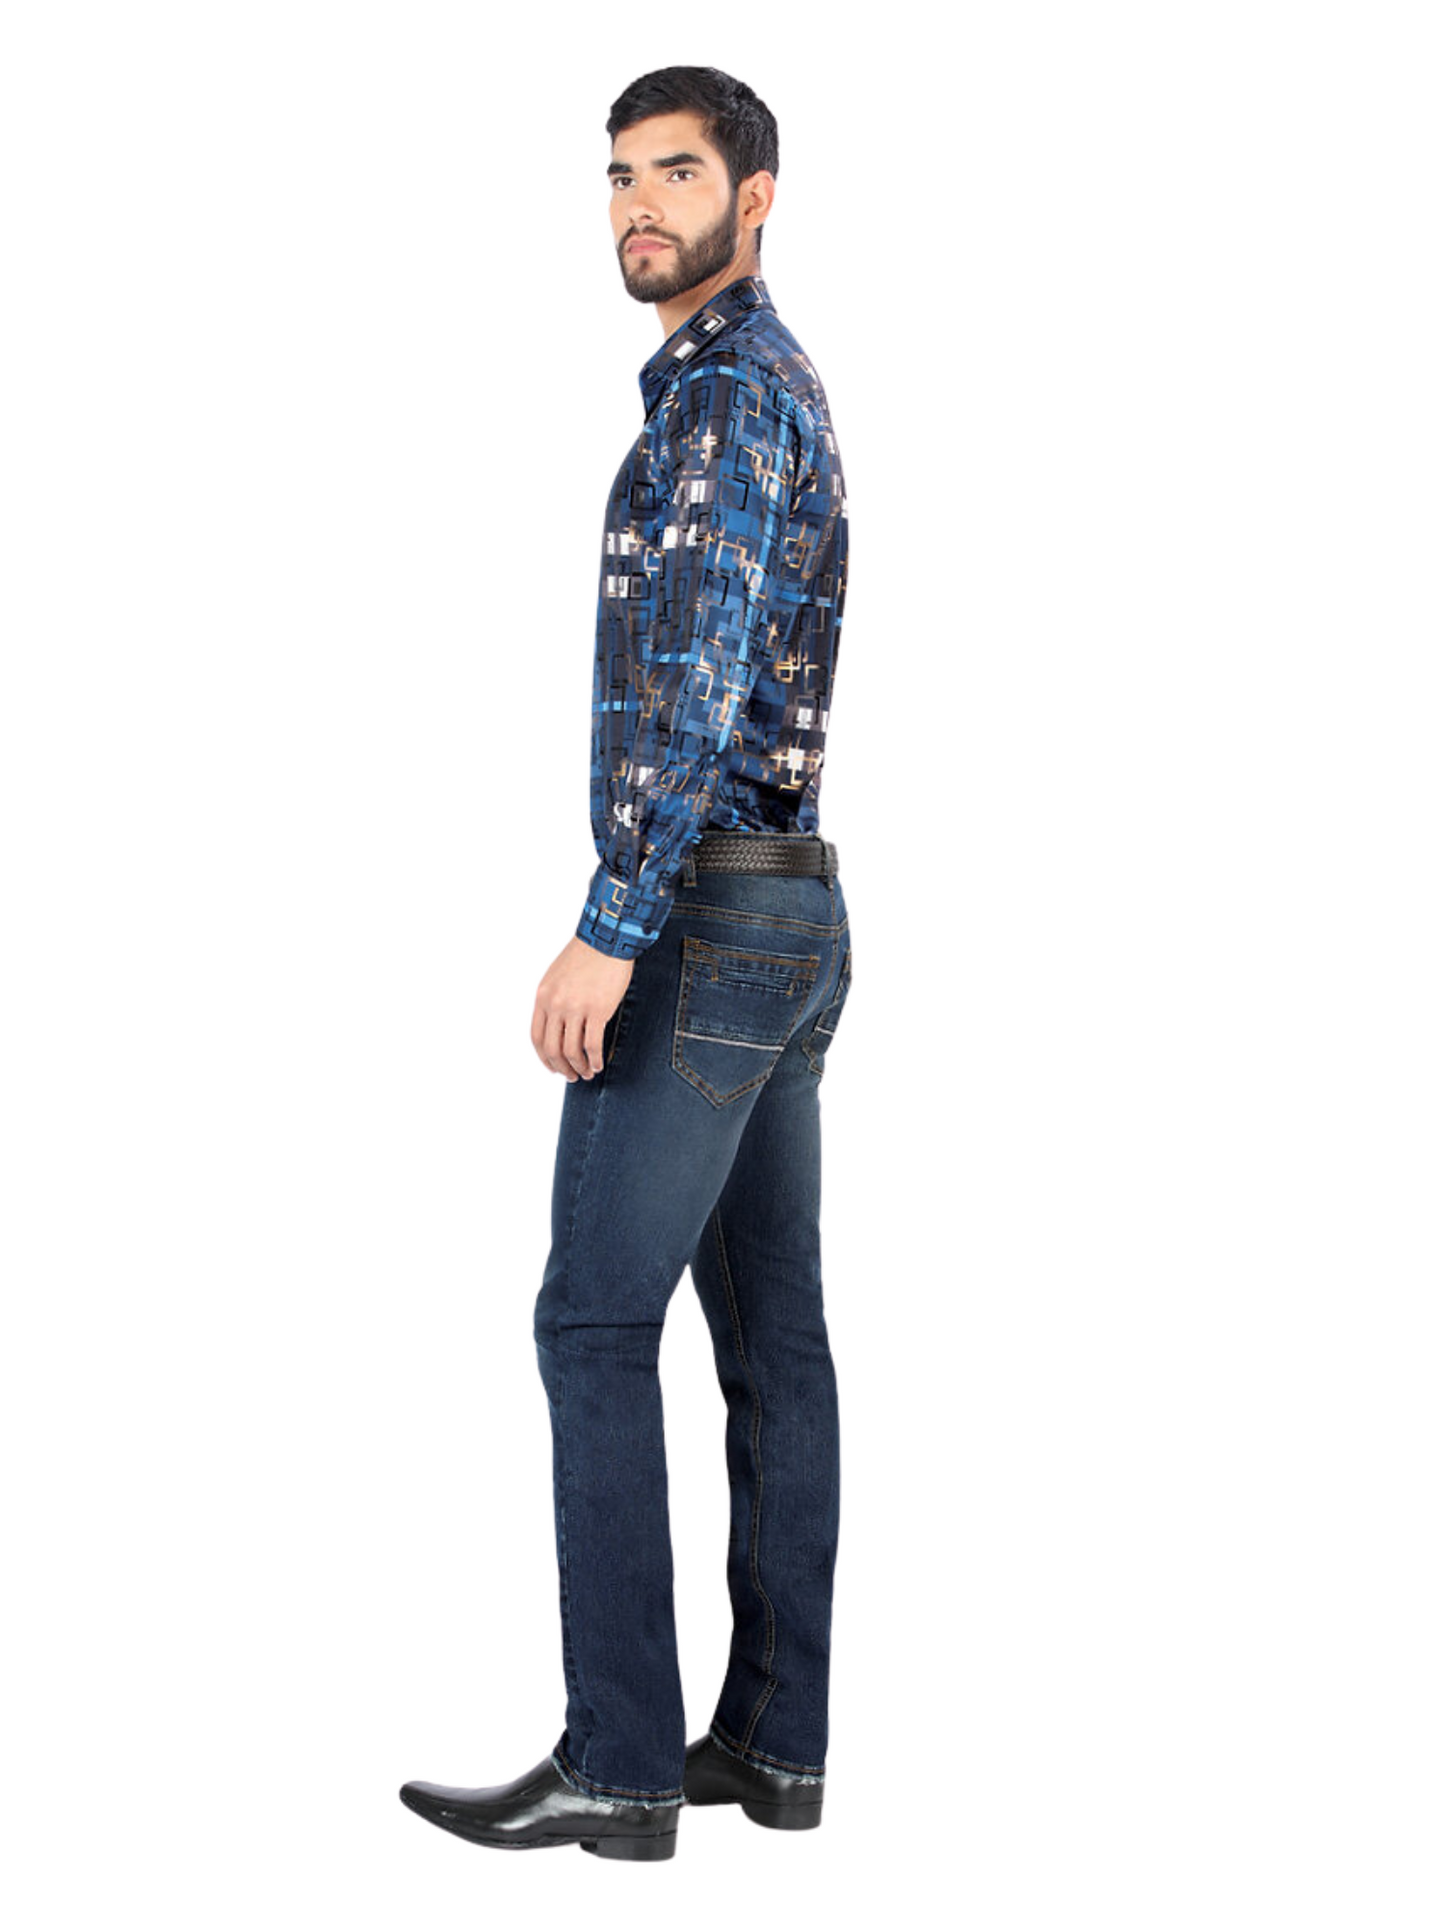 Stretch Denim Jeans for Men 'Montero' - ID: 5301 Denim Jeans Montero